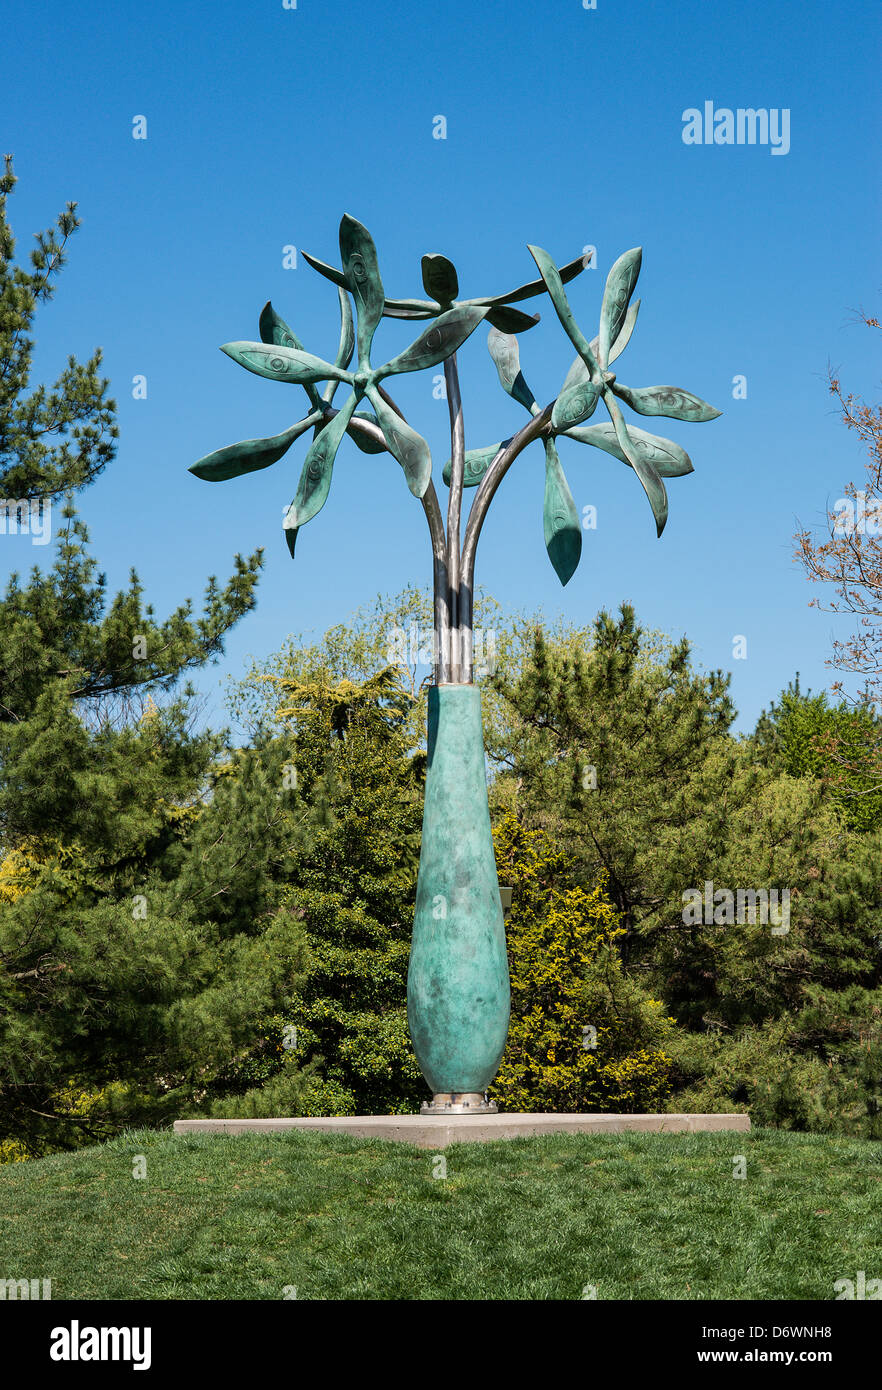 Flower sculpture, Grounds for Sculpture, Hamilton, New Jersey, USA Stock Photo